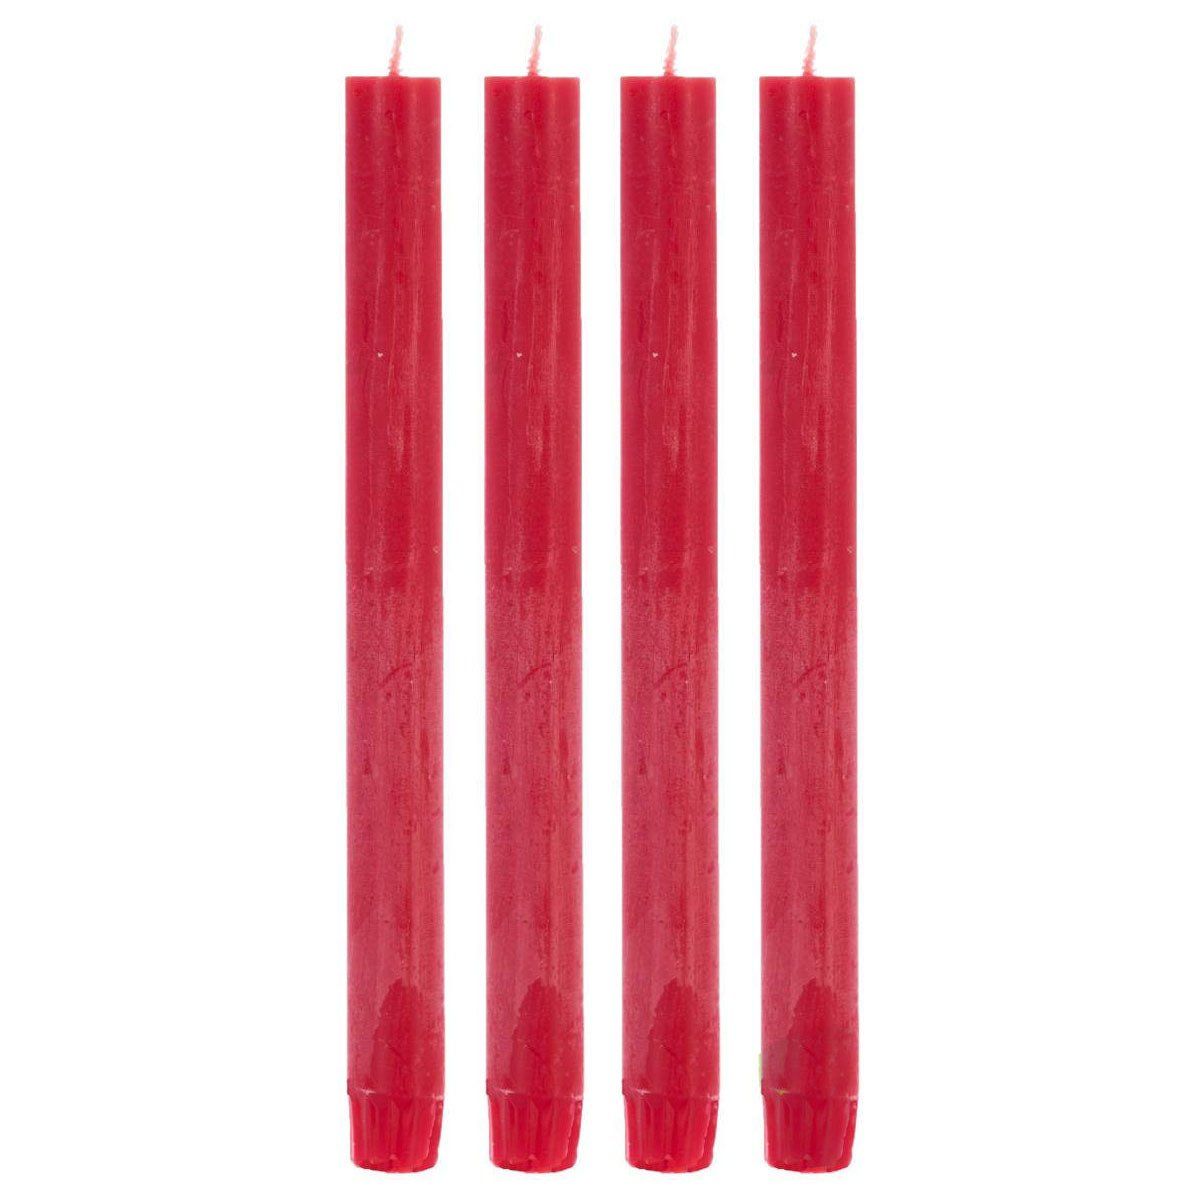 5five Simply Smart Sada 4 rustikálních svíček v červené barvě, výška 24,7 cm - EMAKO.CZ s.r.o.